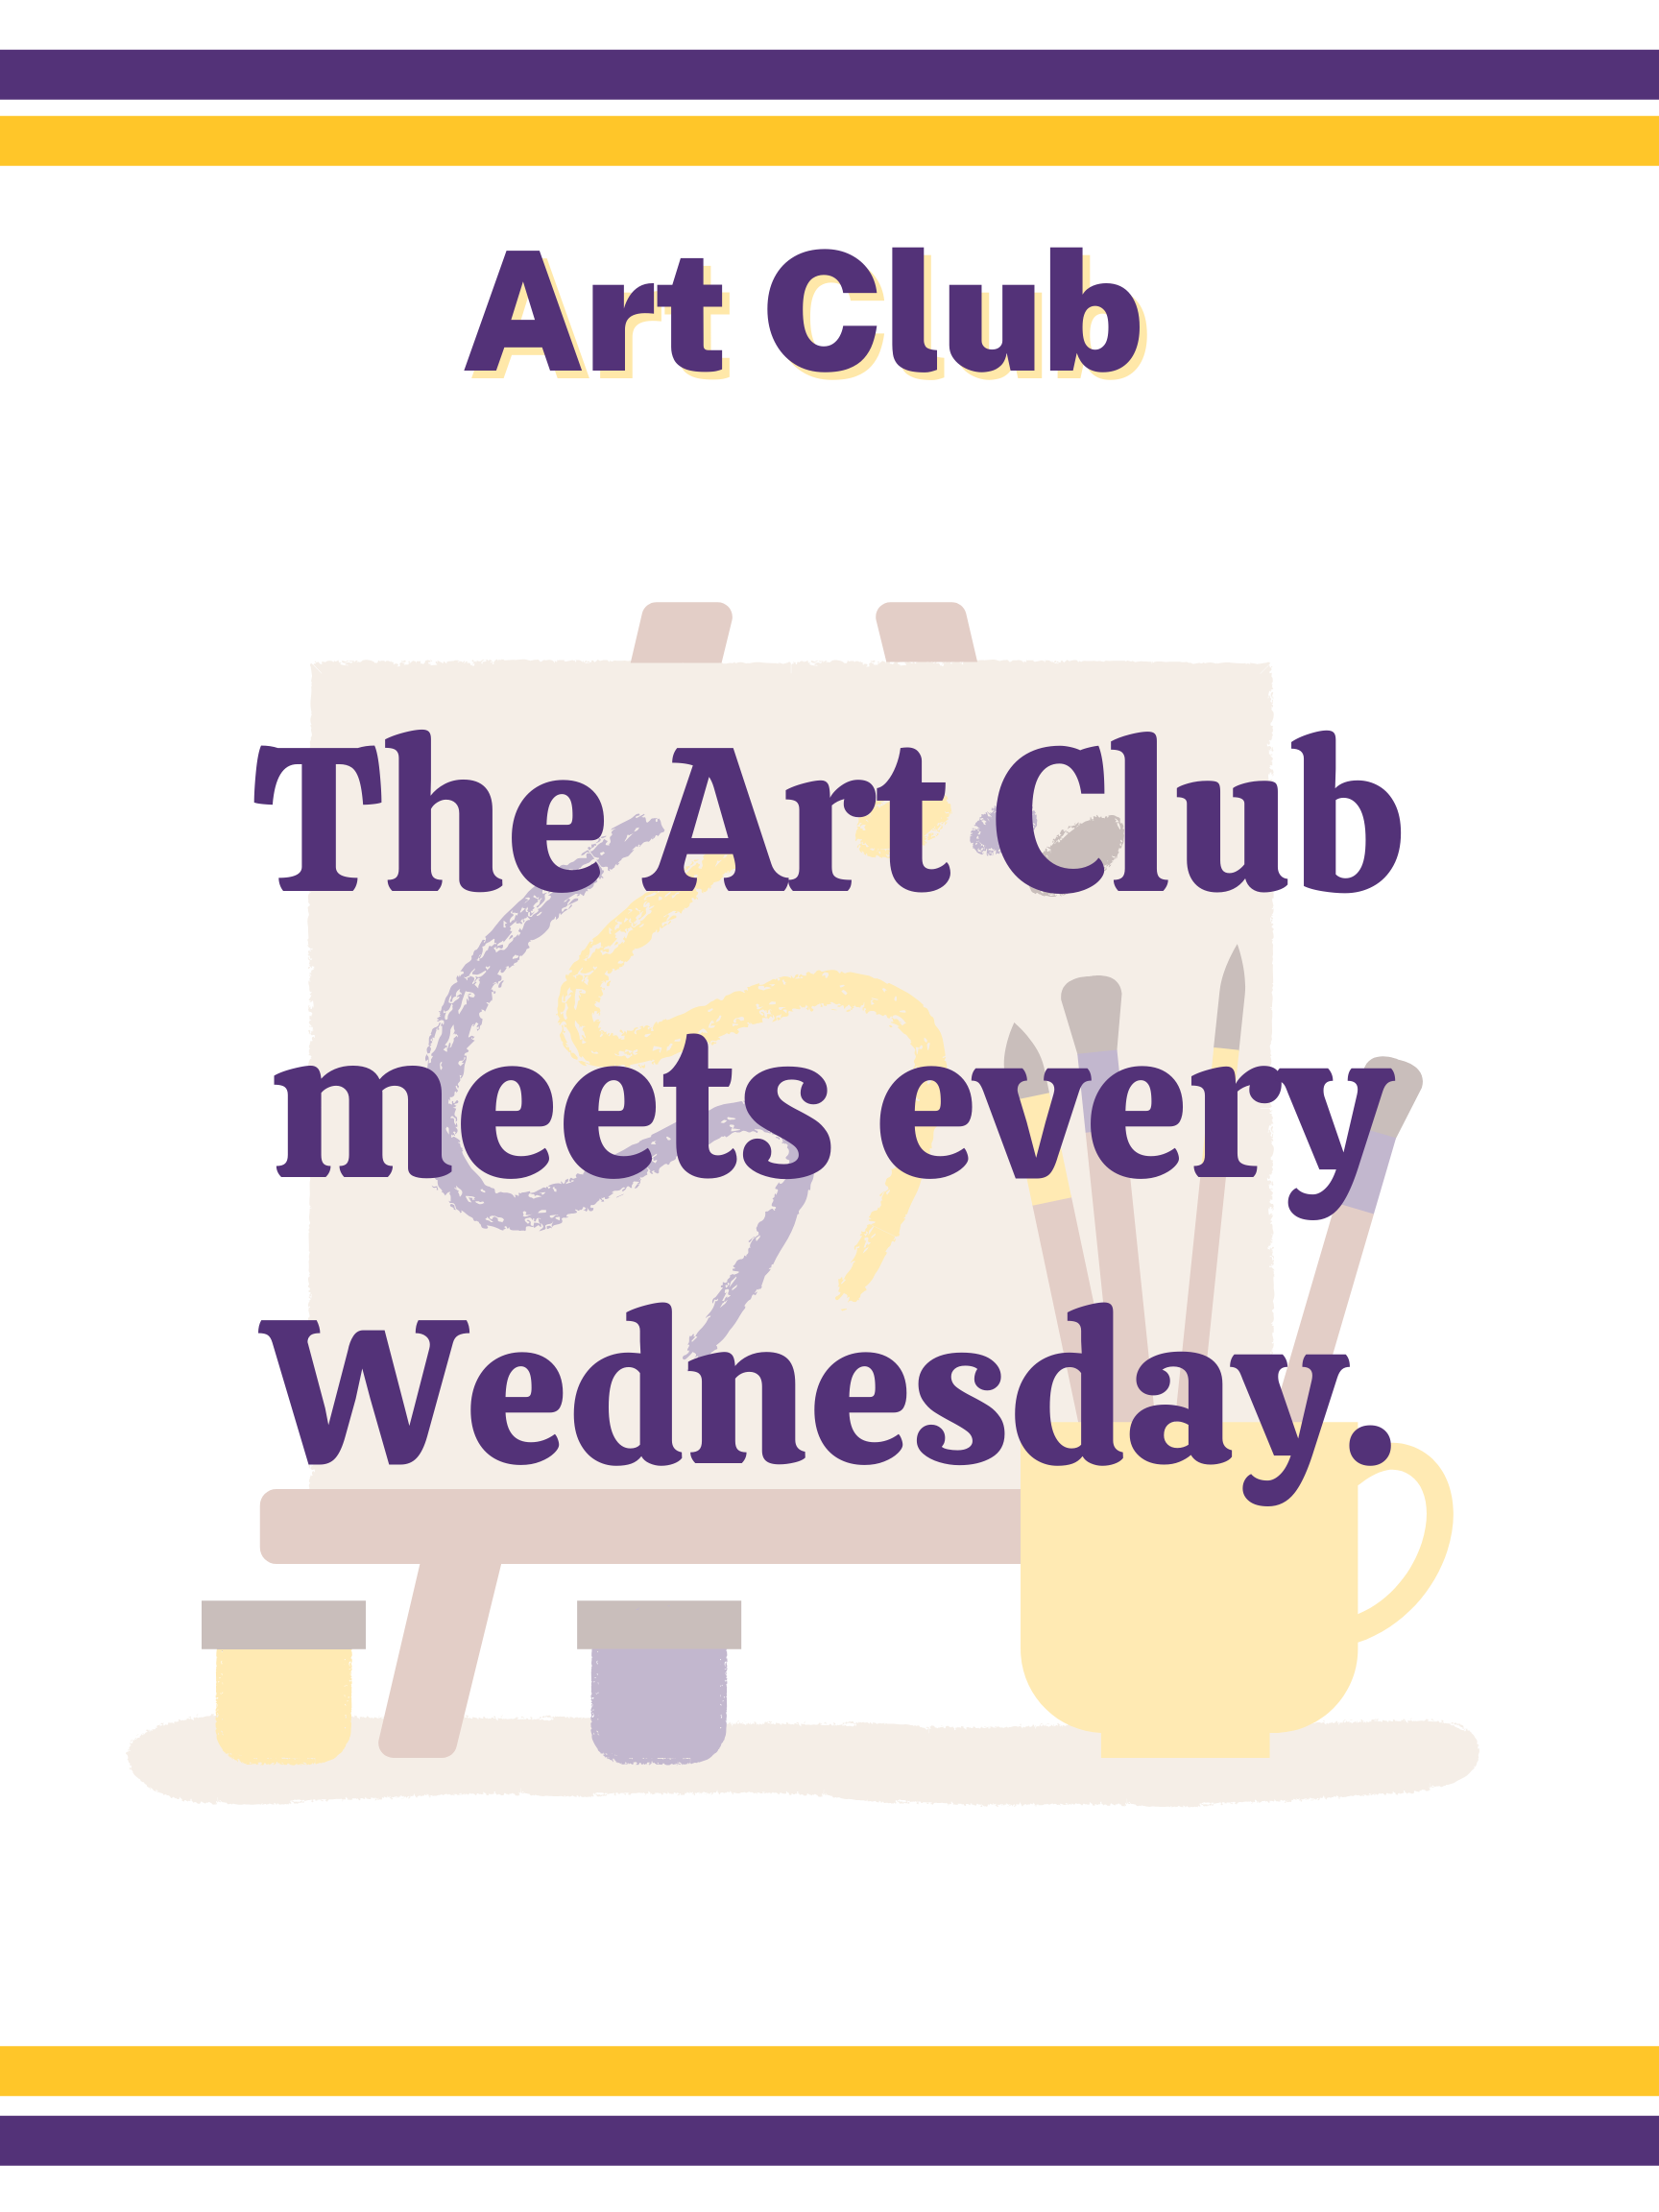 Art club meets every Wednesday